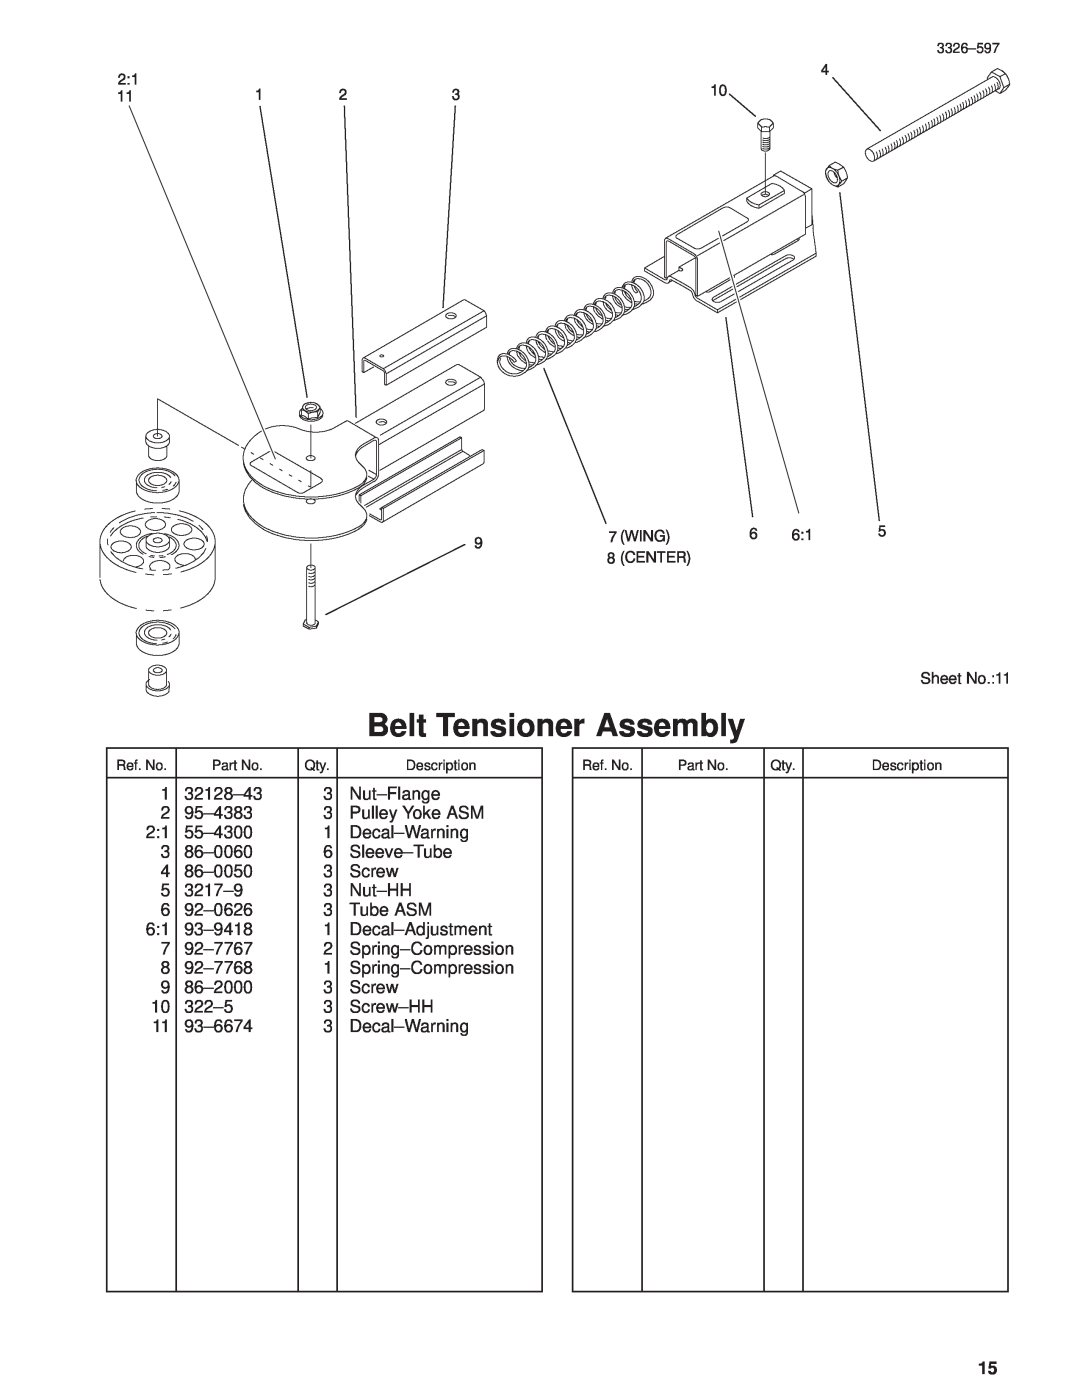 Toro 30402210000001 and Up manual Belt Tensioner Assembly, Sheet No.11 